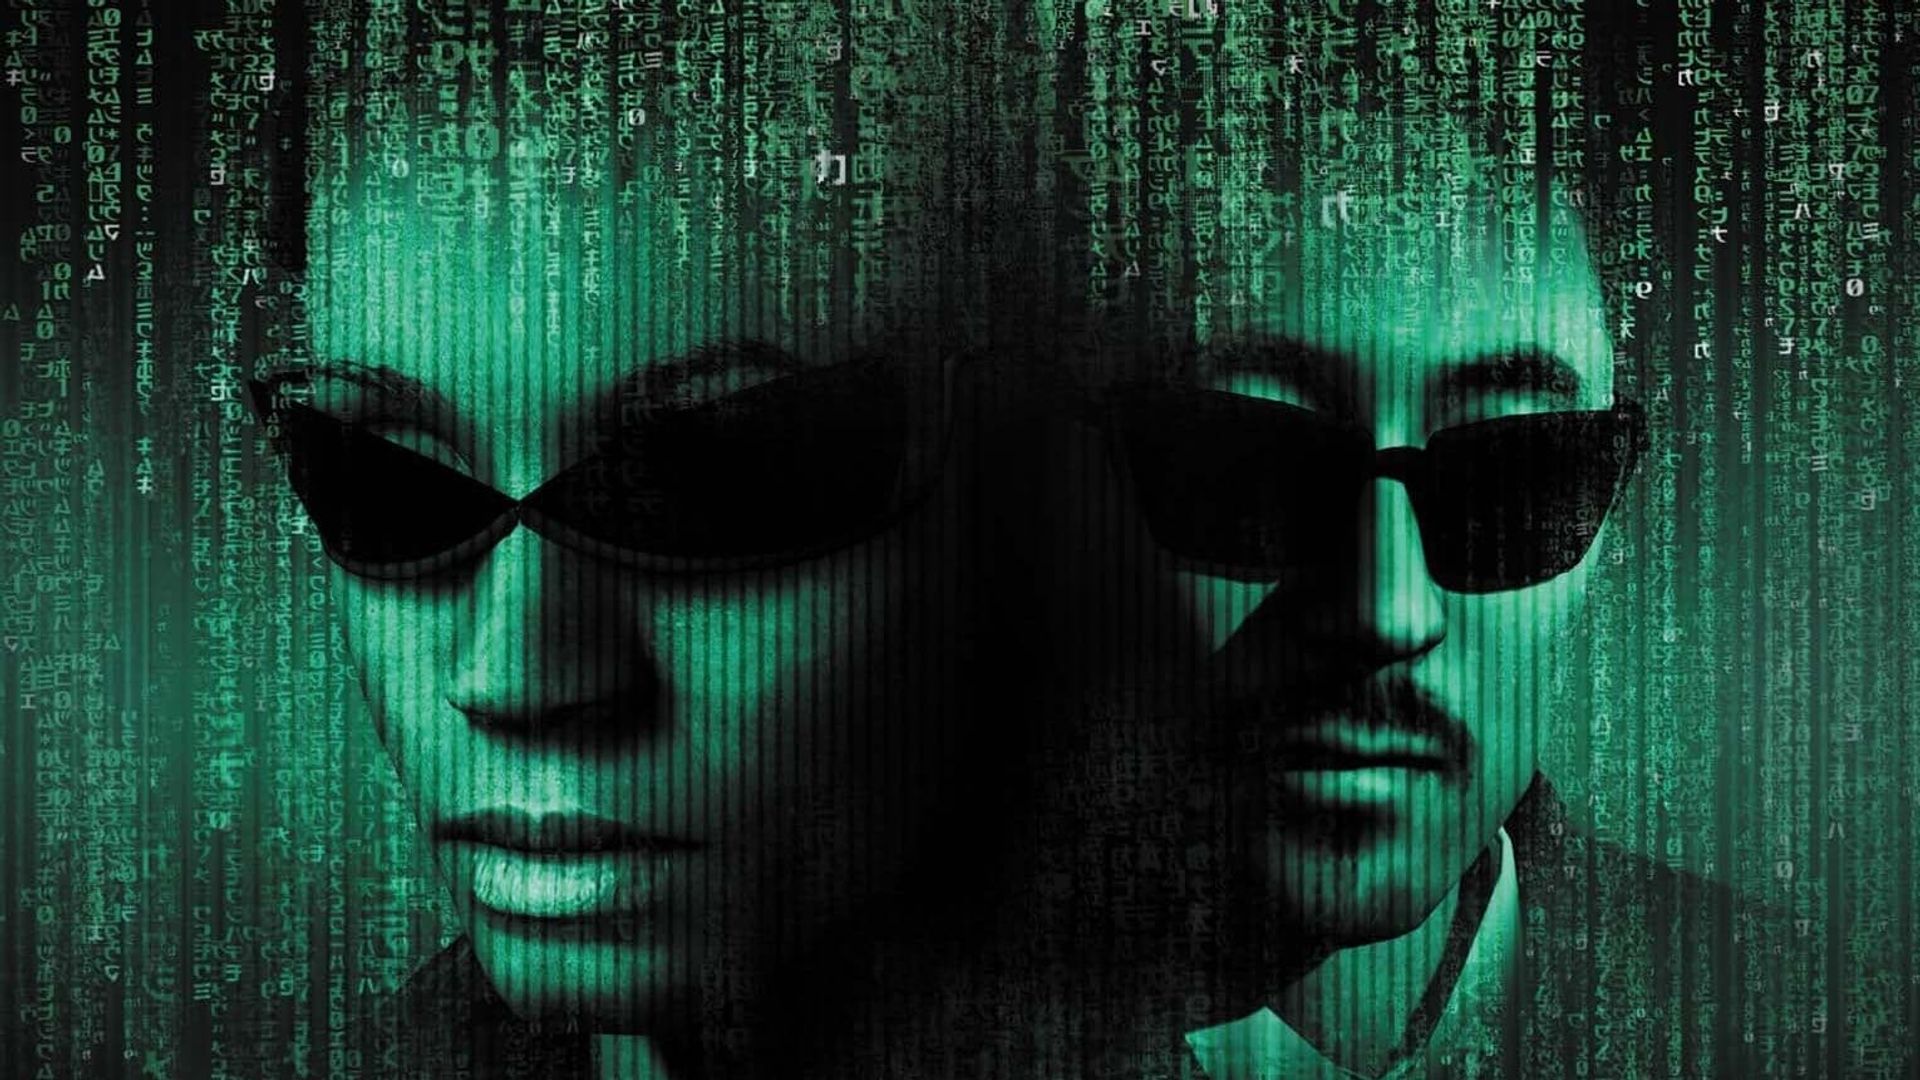 Making 'Enter the Matrix' background